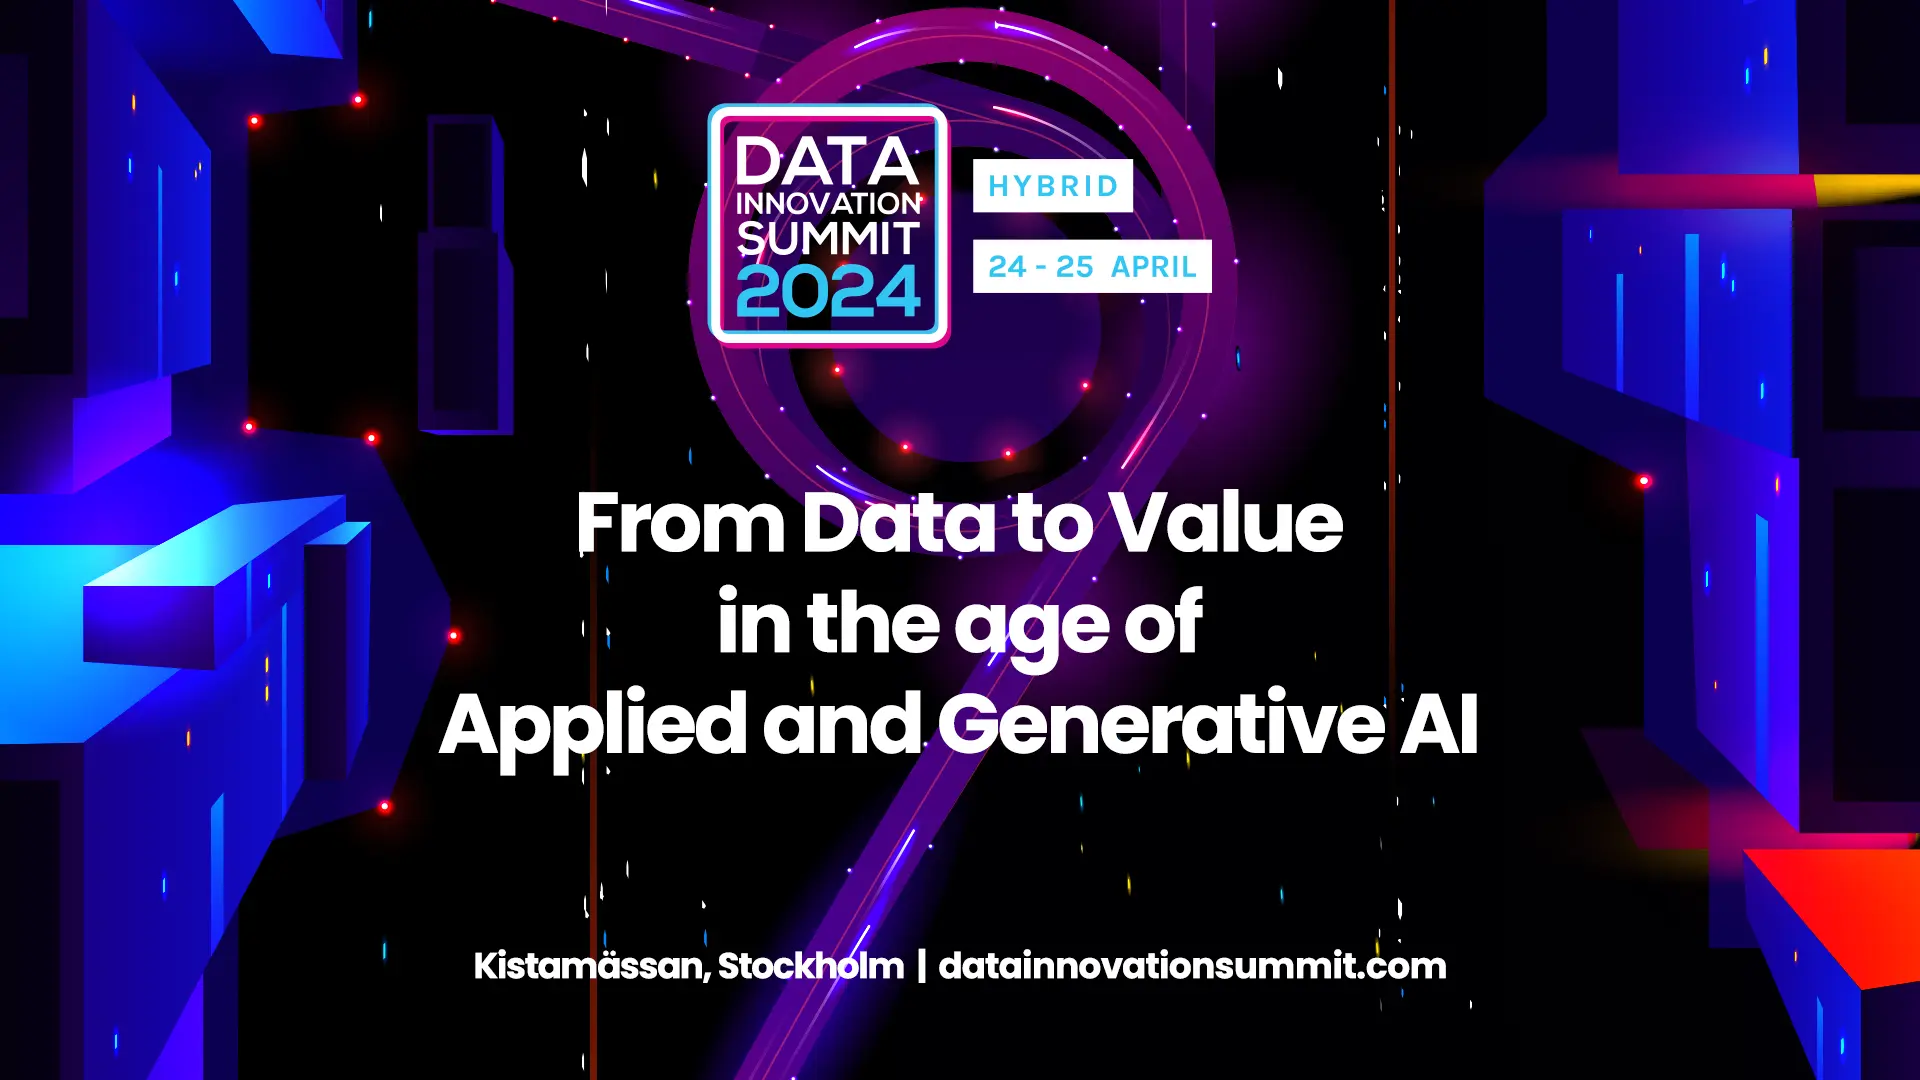 Data Innovation Summit 2024 Hybrid